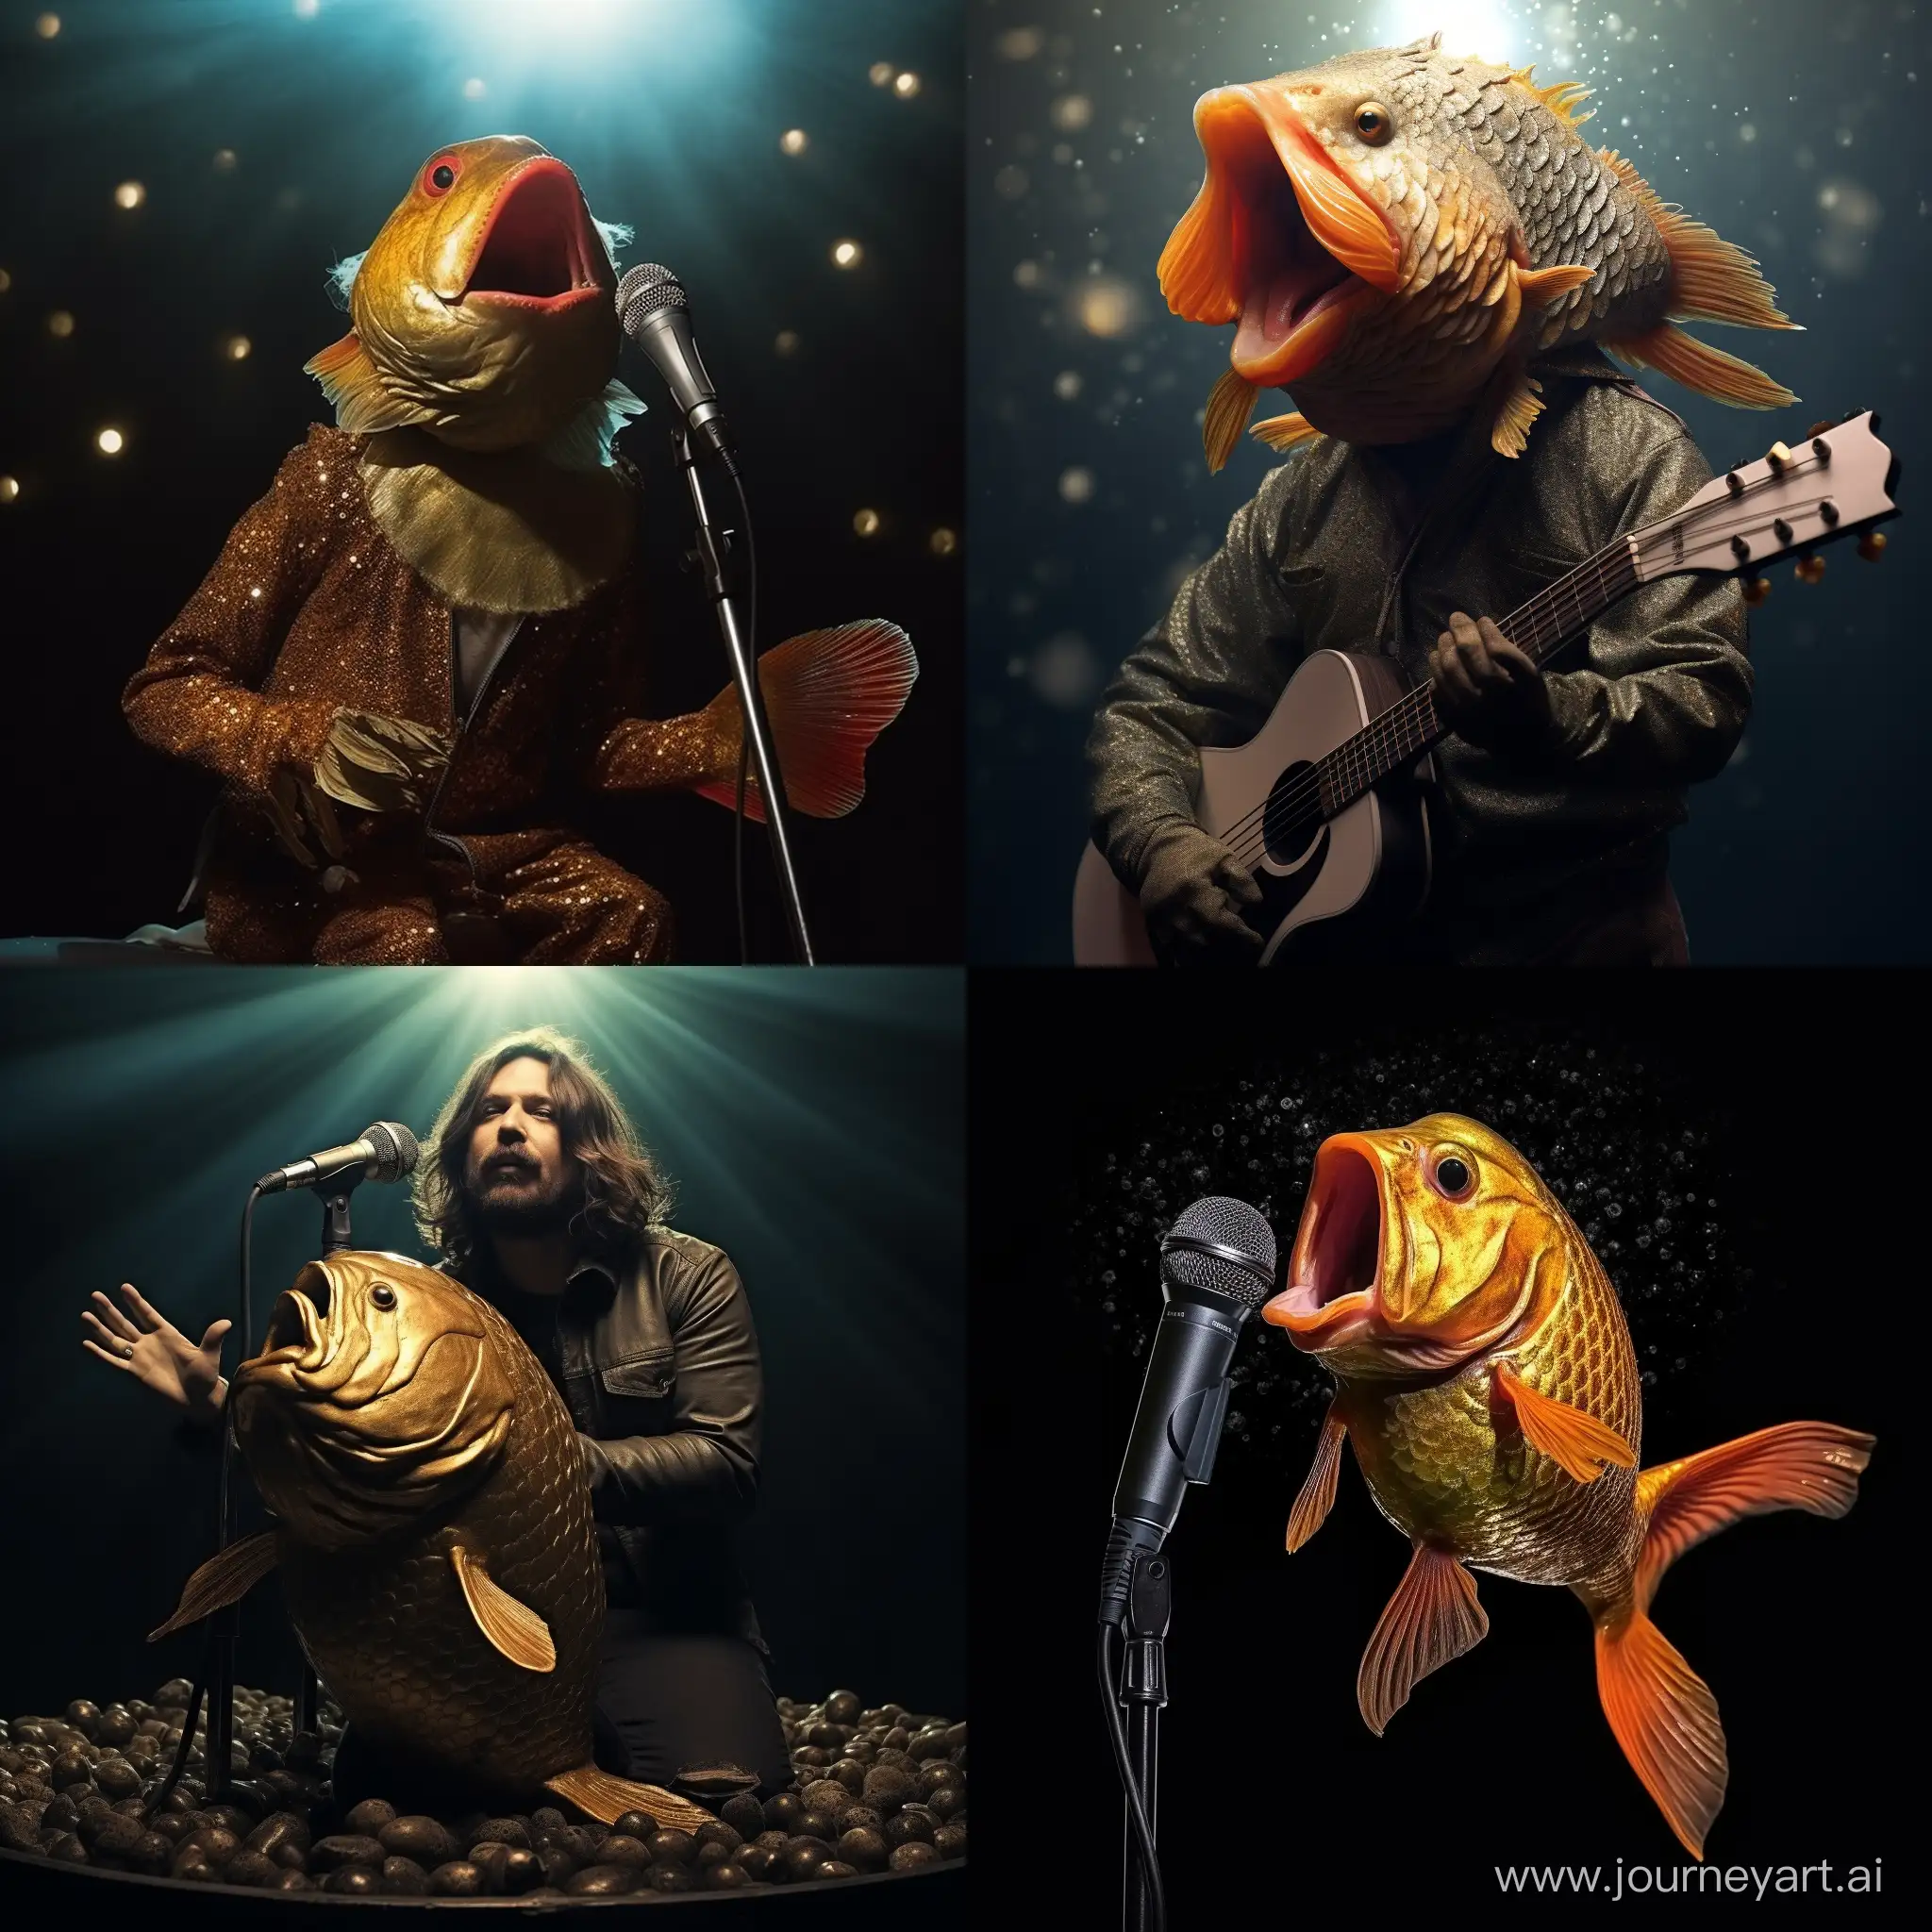 Enchanting-Golden-Fish-Rock-Singer-on-a-Mesmerizing-Stage